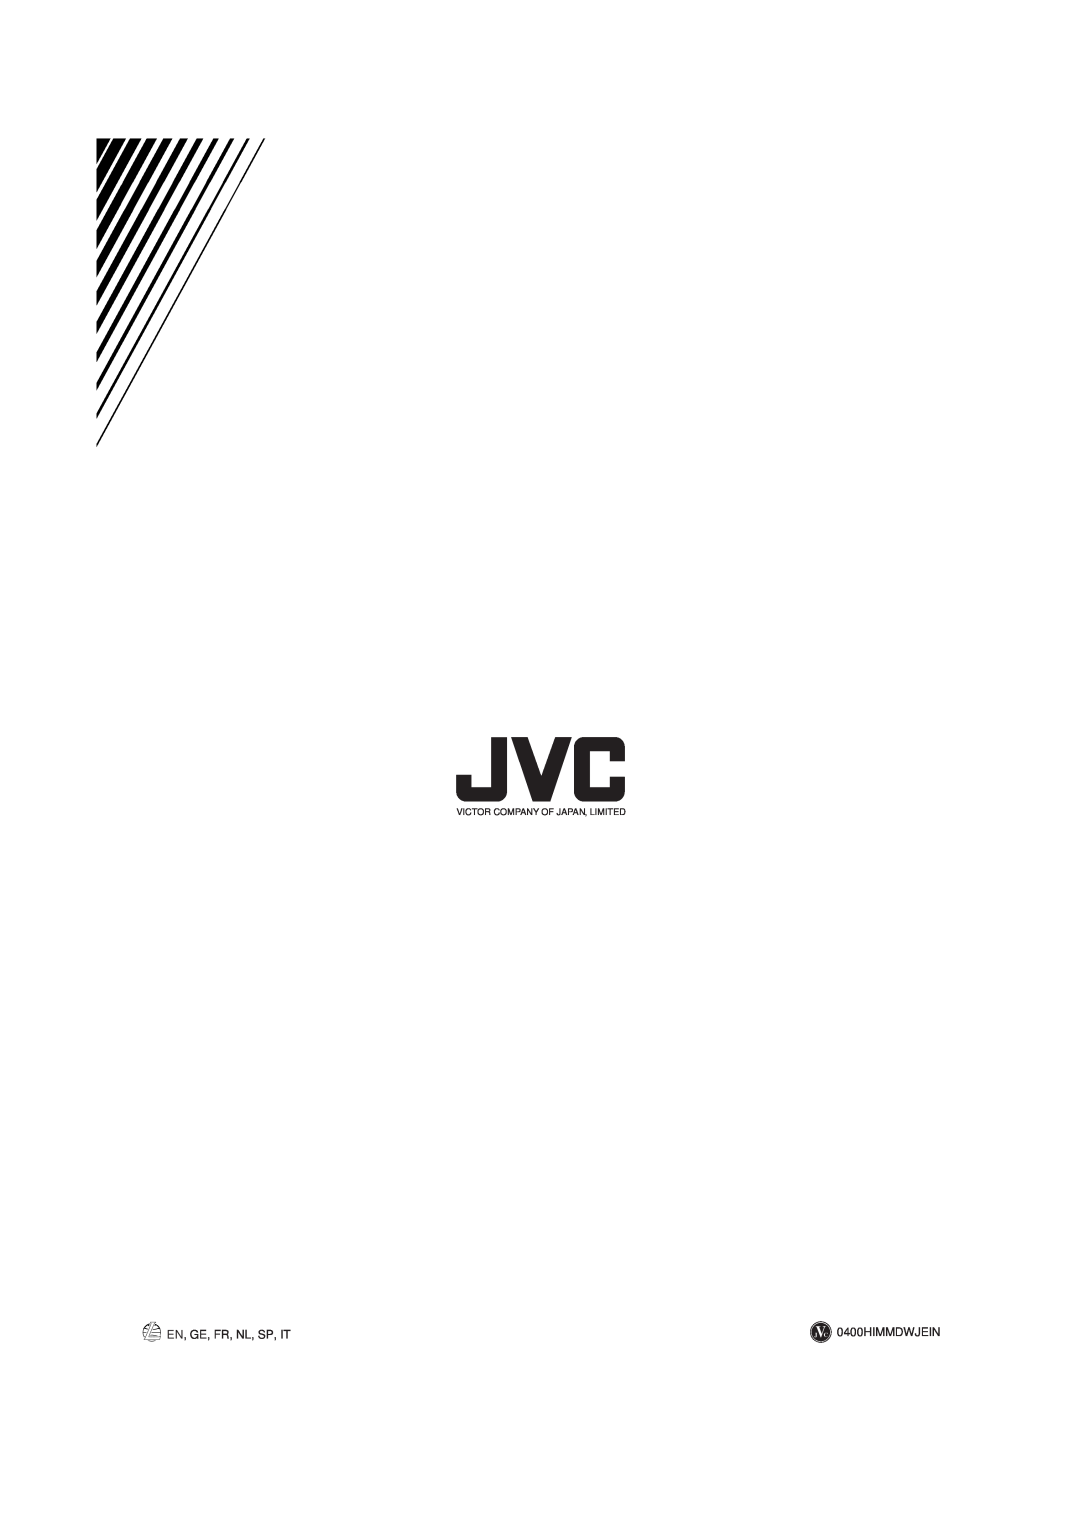 JVC RX-7000RBK manual En, Ge, Fr, Nl, Sp, It, J C 0400HIMMDWJEIN, Victor Company Of Japan, Limited 